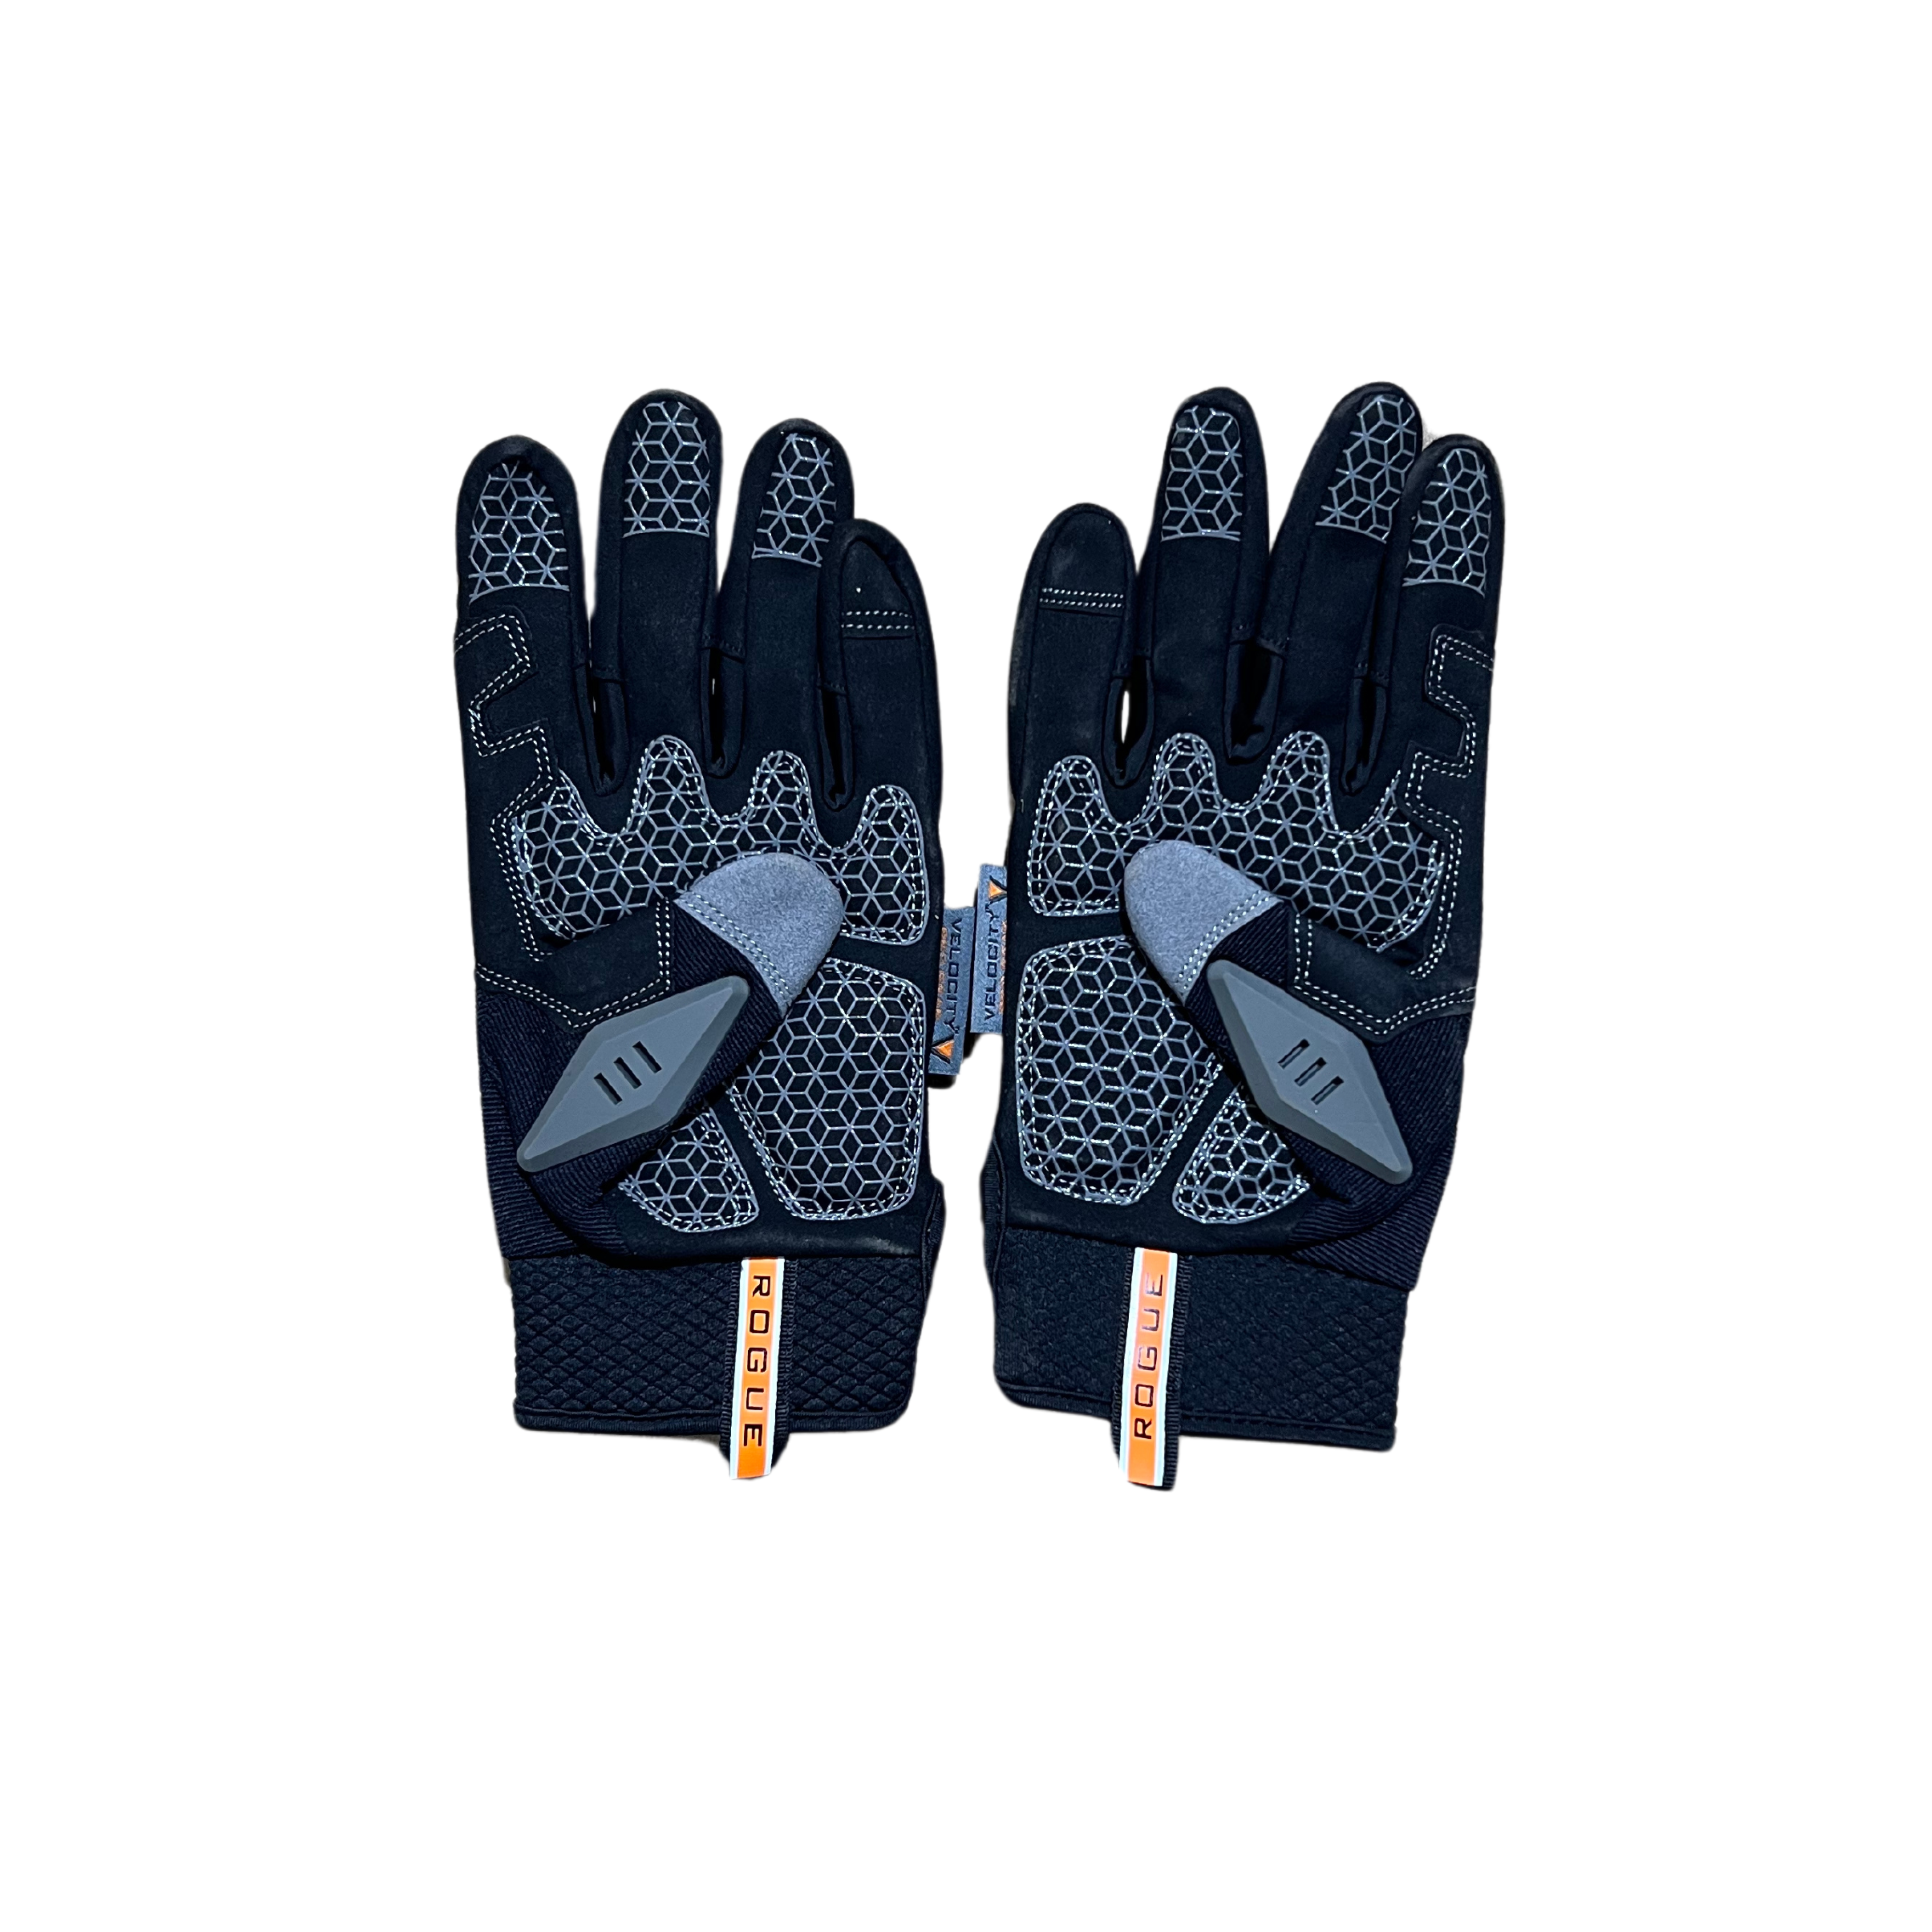 Anti-Impact Safety Gloves